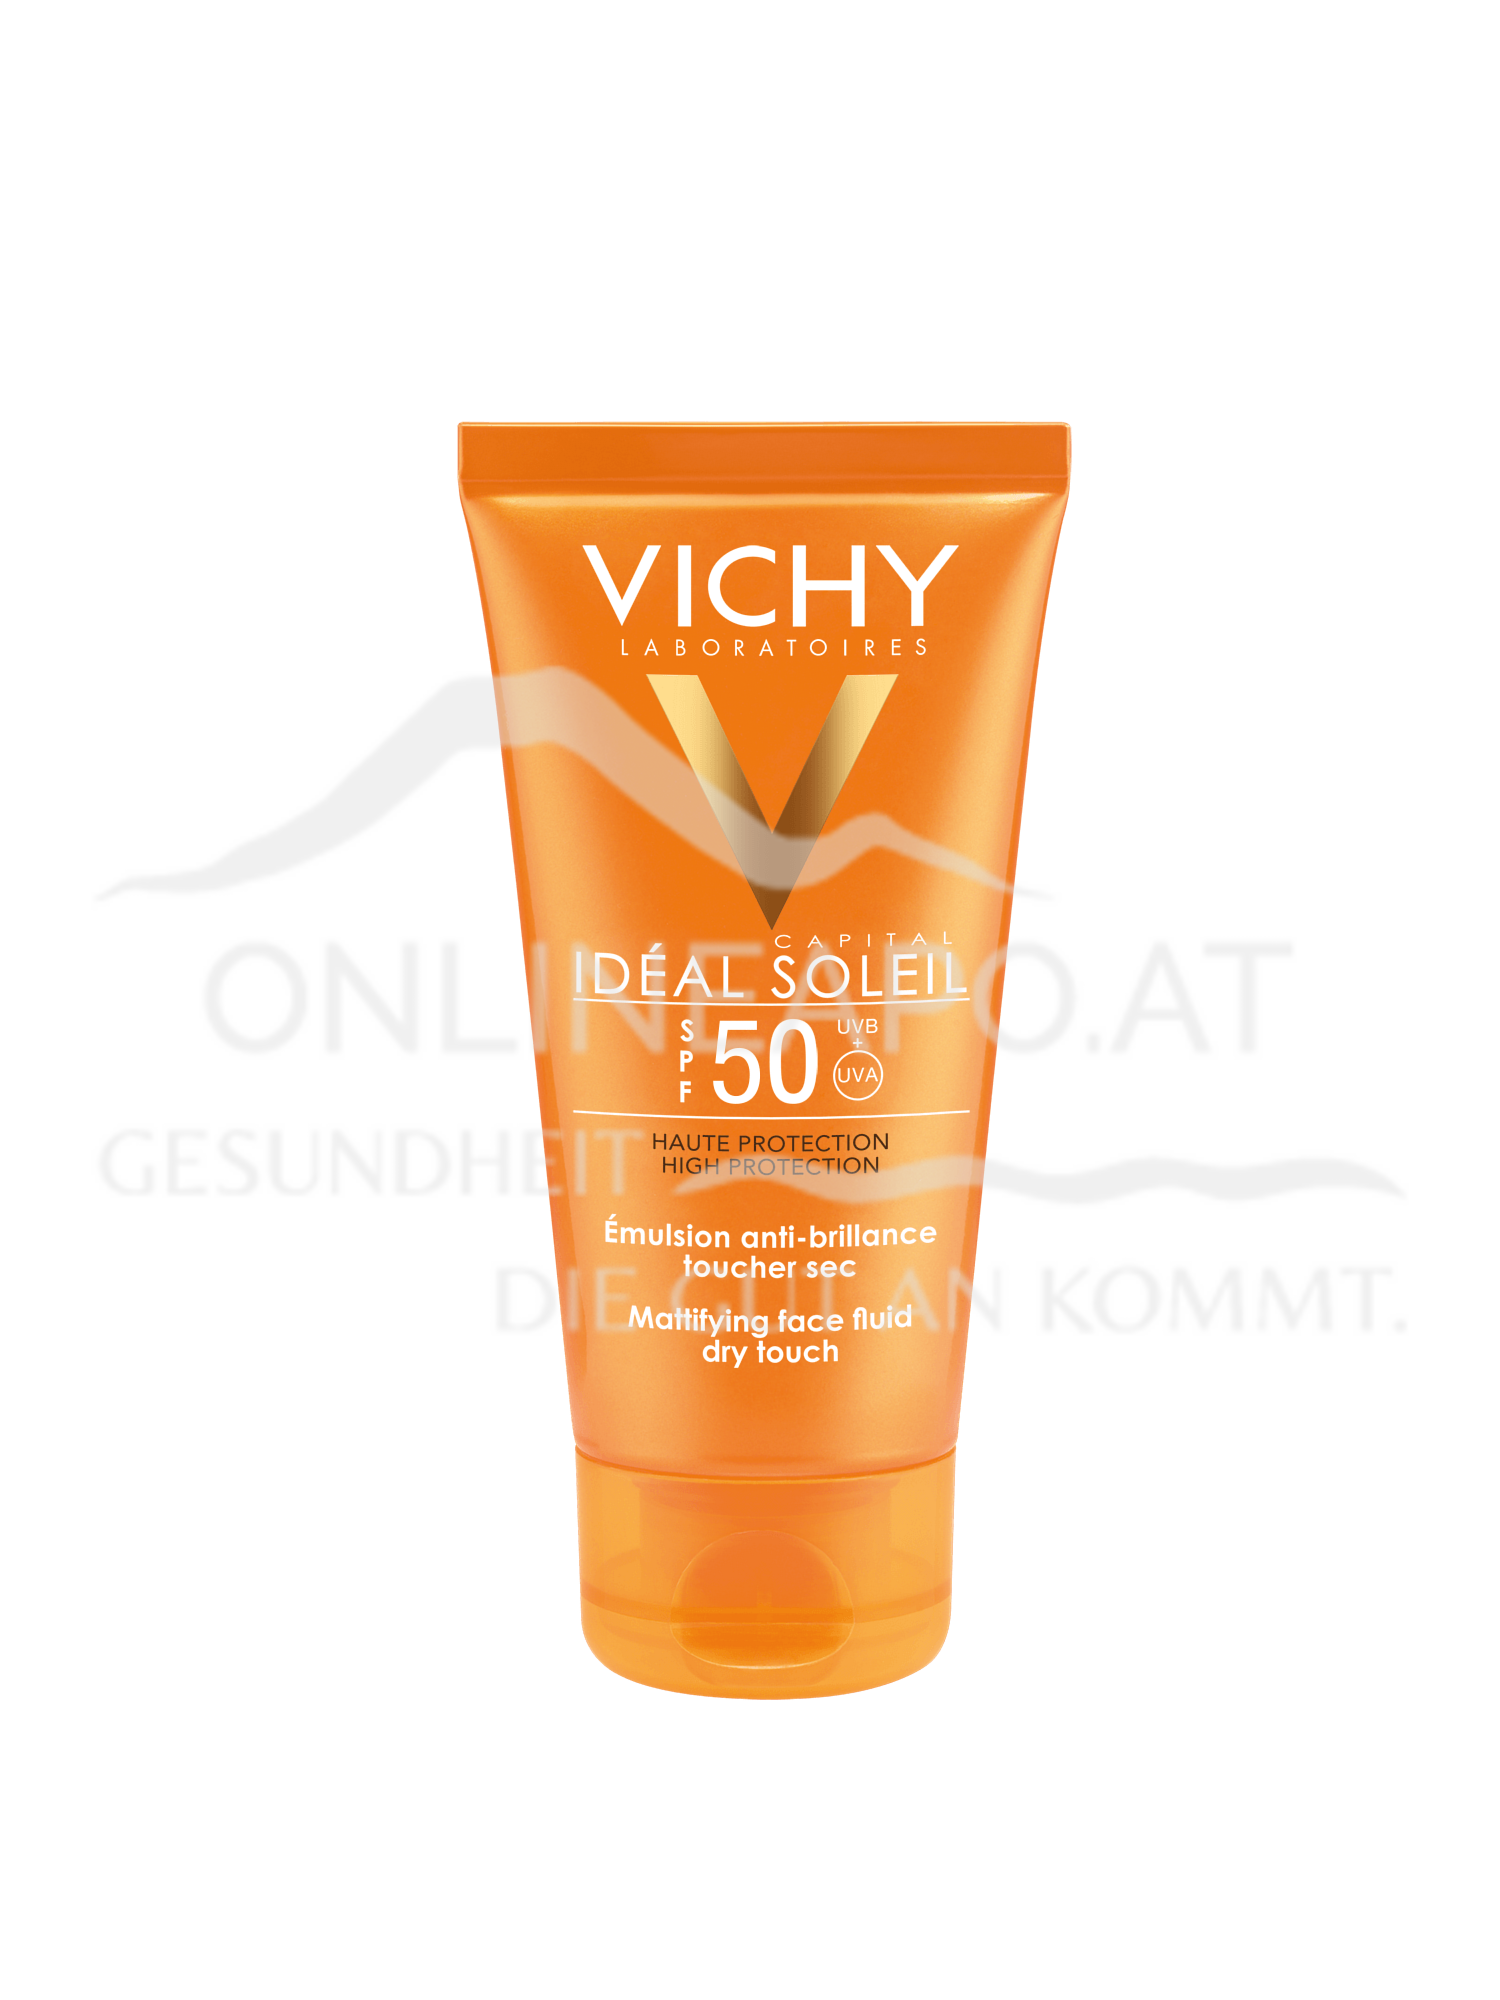 VICHY Ideal Soleil Sonnen Mattierendes Fluid Dry Touch LSF 50